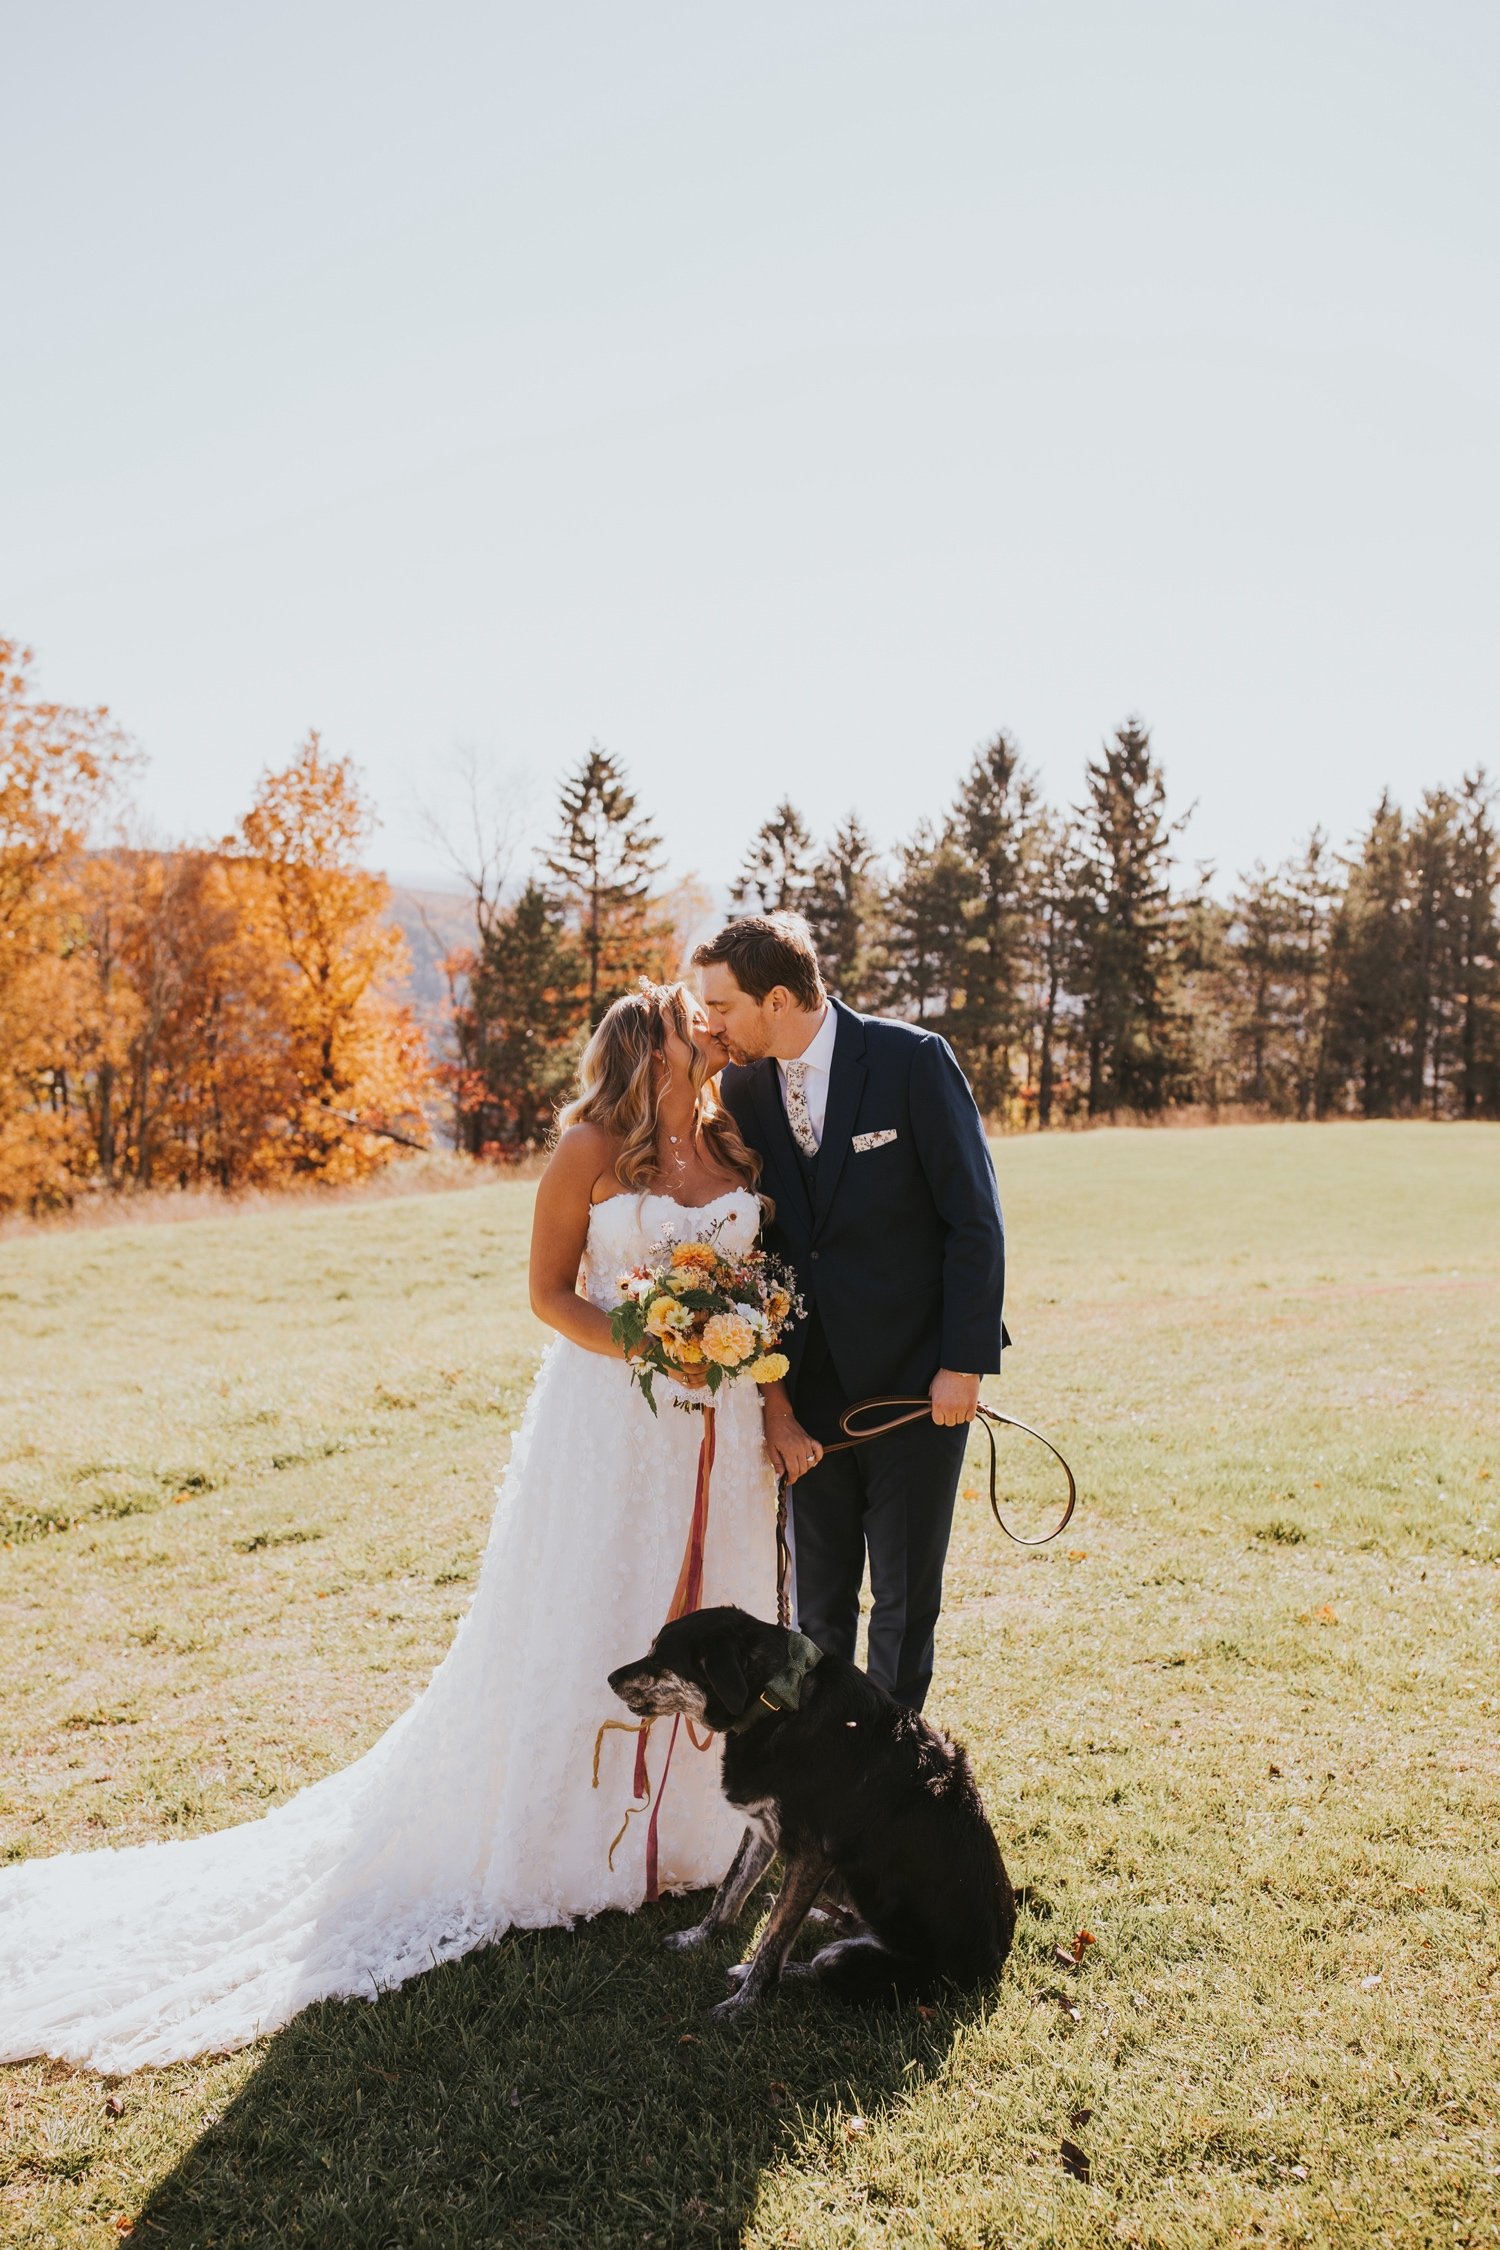 Catskills Wedding Photographer, Seminary Hill Orchard Wedding, Hudson Valley Wedding Photographer, Catskills Wedding in Fall